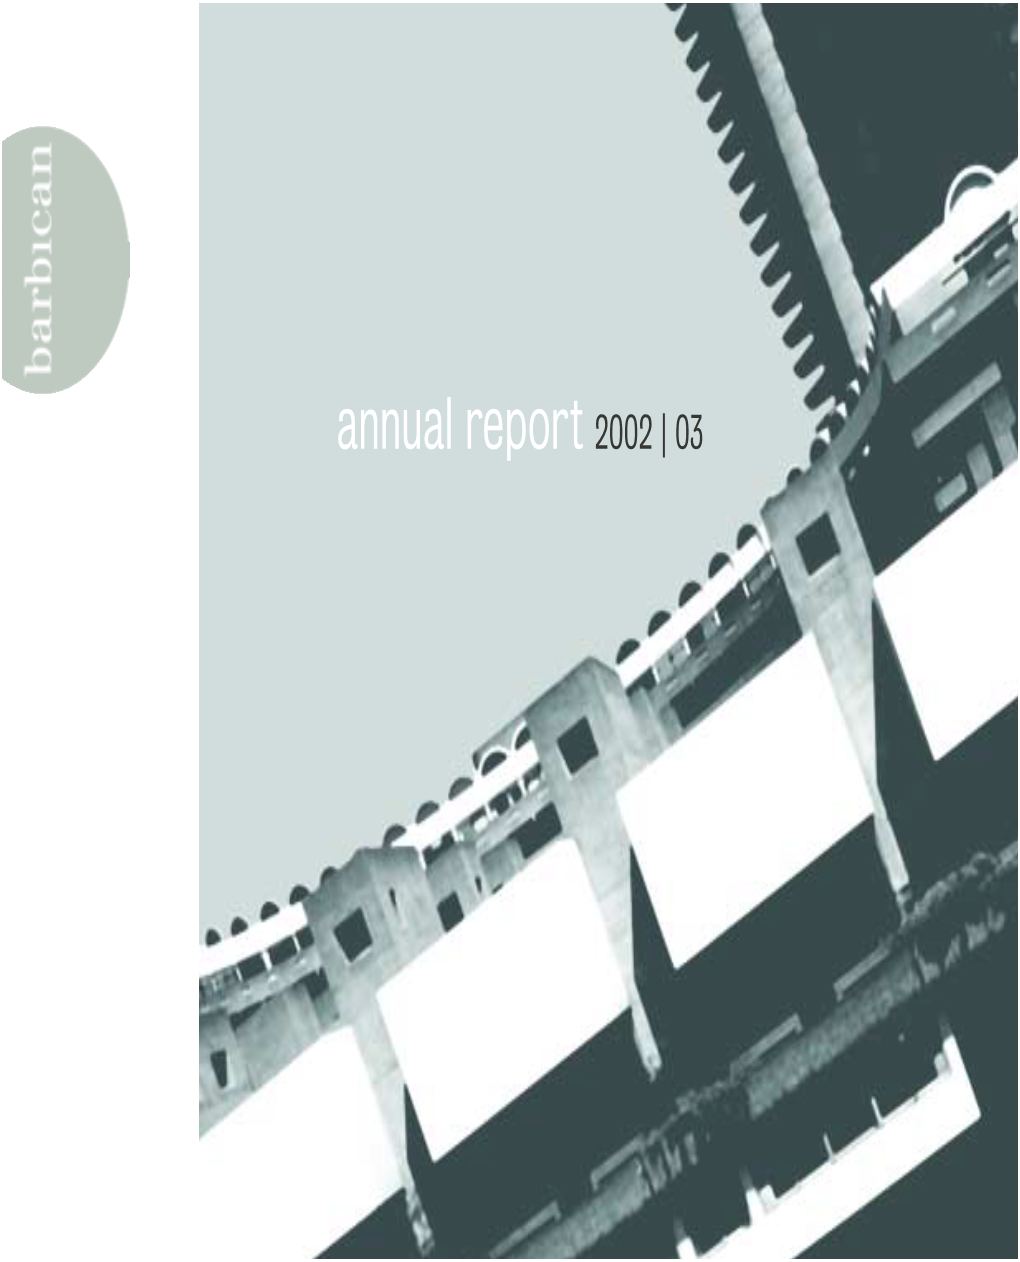 Annual Report 2002 | 03 Annual Report Cover TP 13/10/03 3:02 Pm Page 3